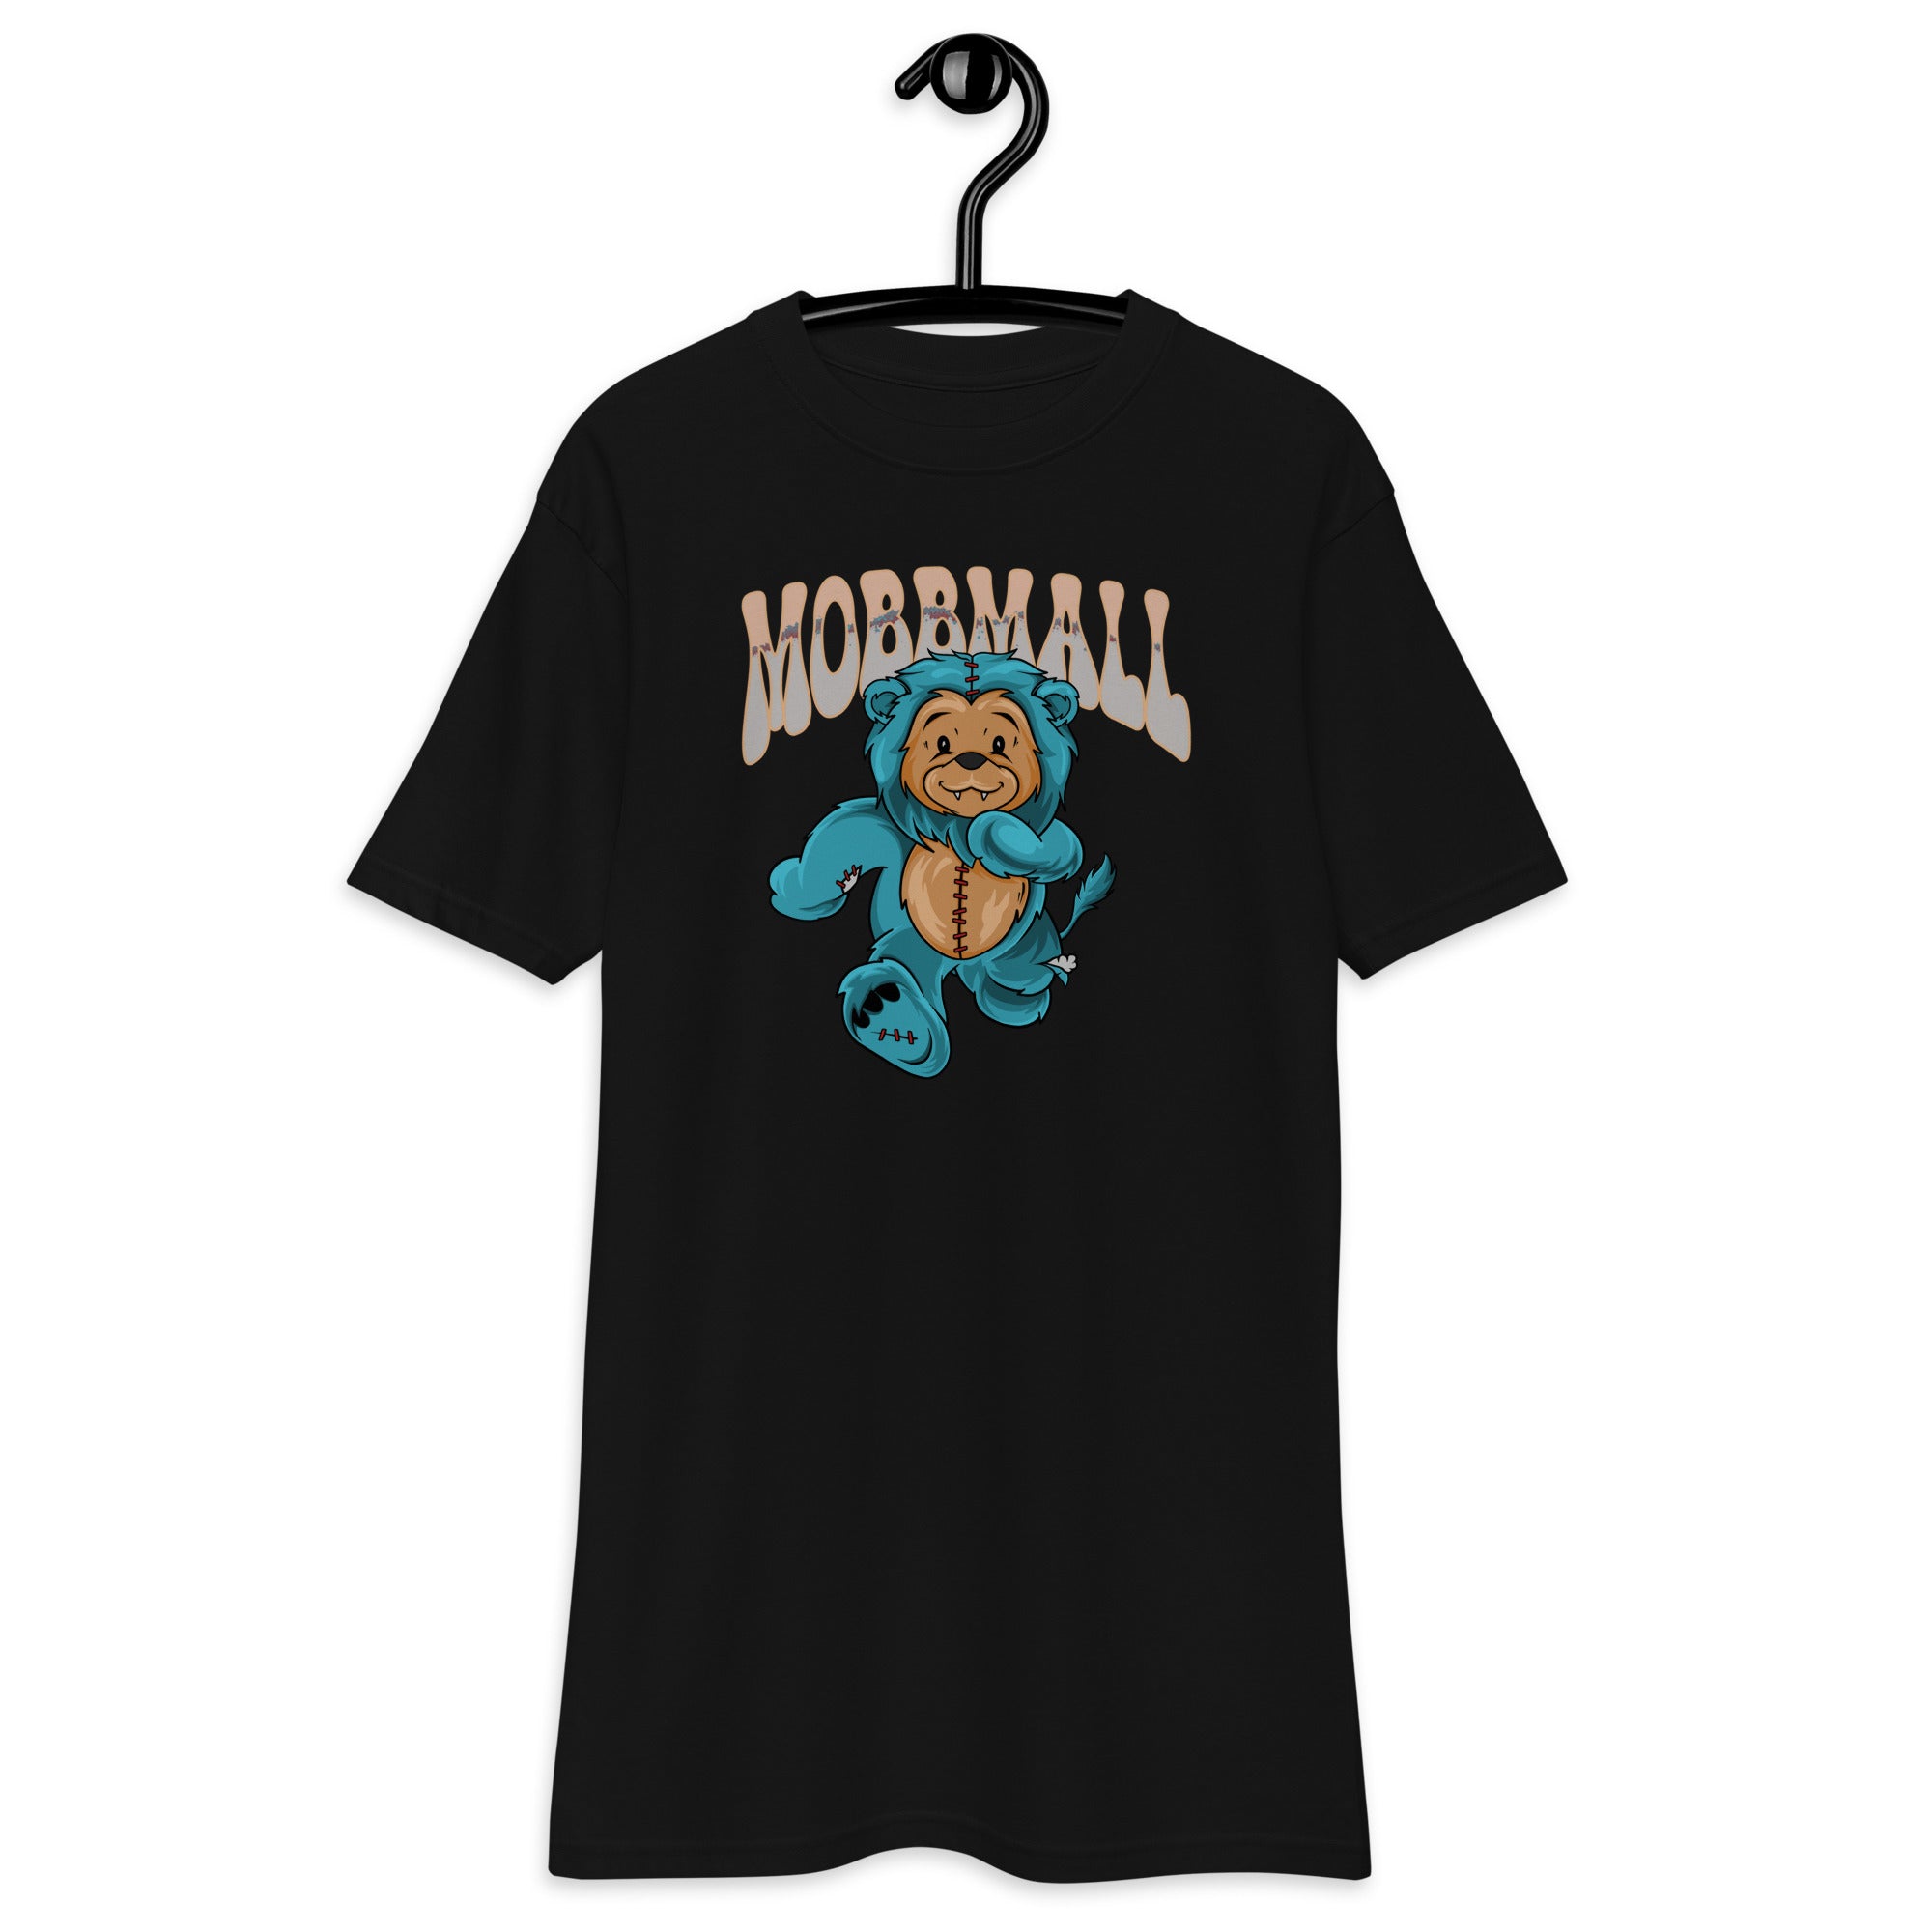 MOBBMALLMen’s premium heavyweight tee - MobbMall